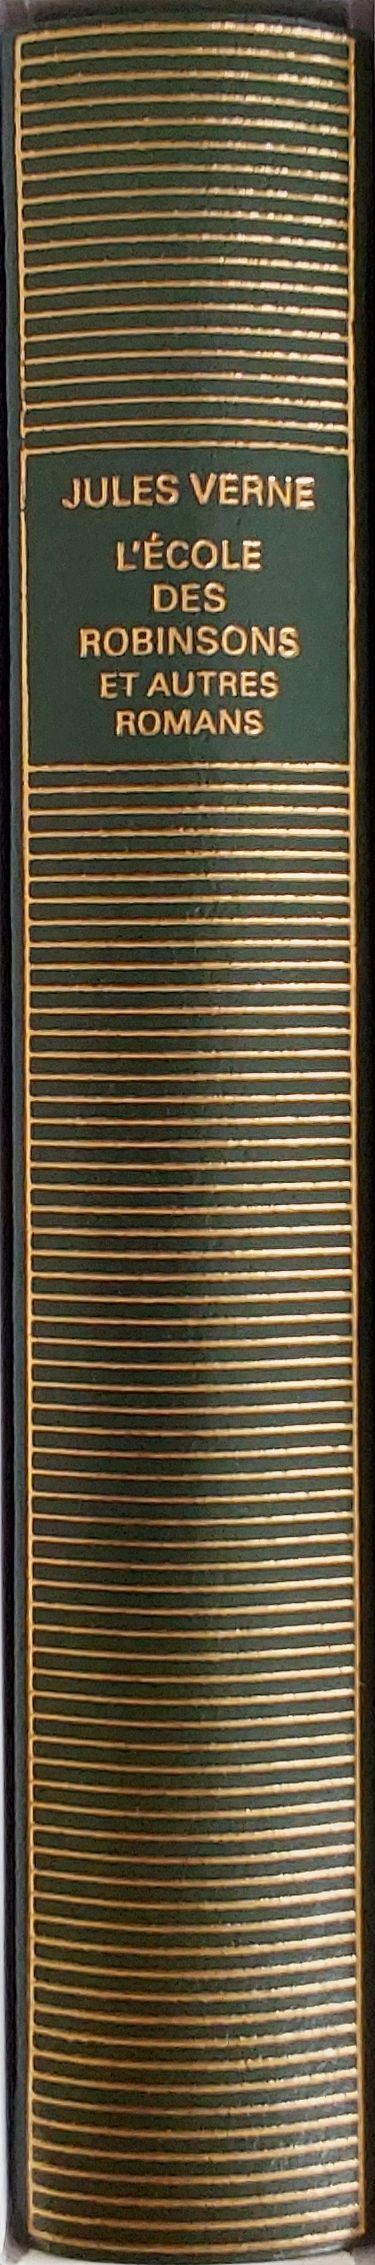 Volume 670 de Verne dans la Bibliothèque de la Pléiade.